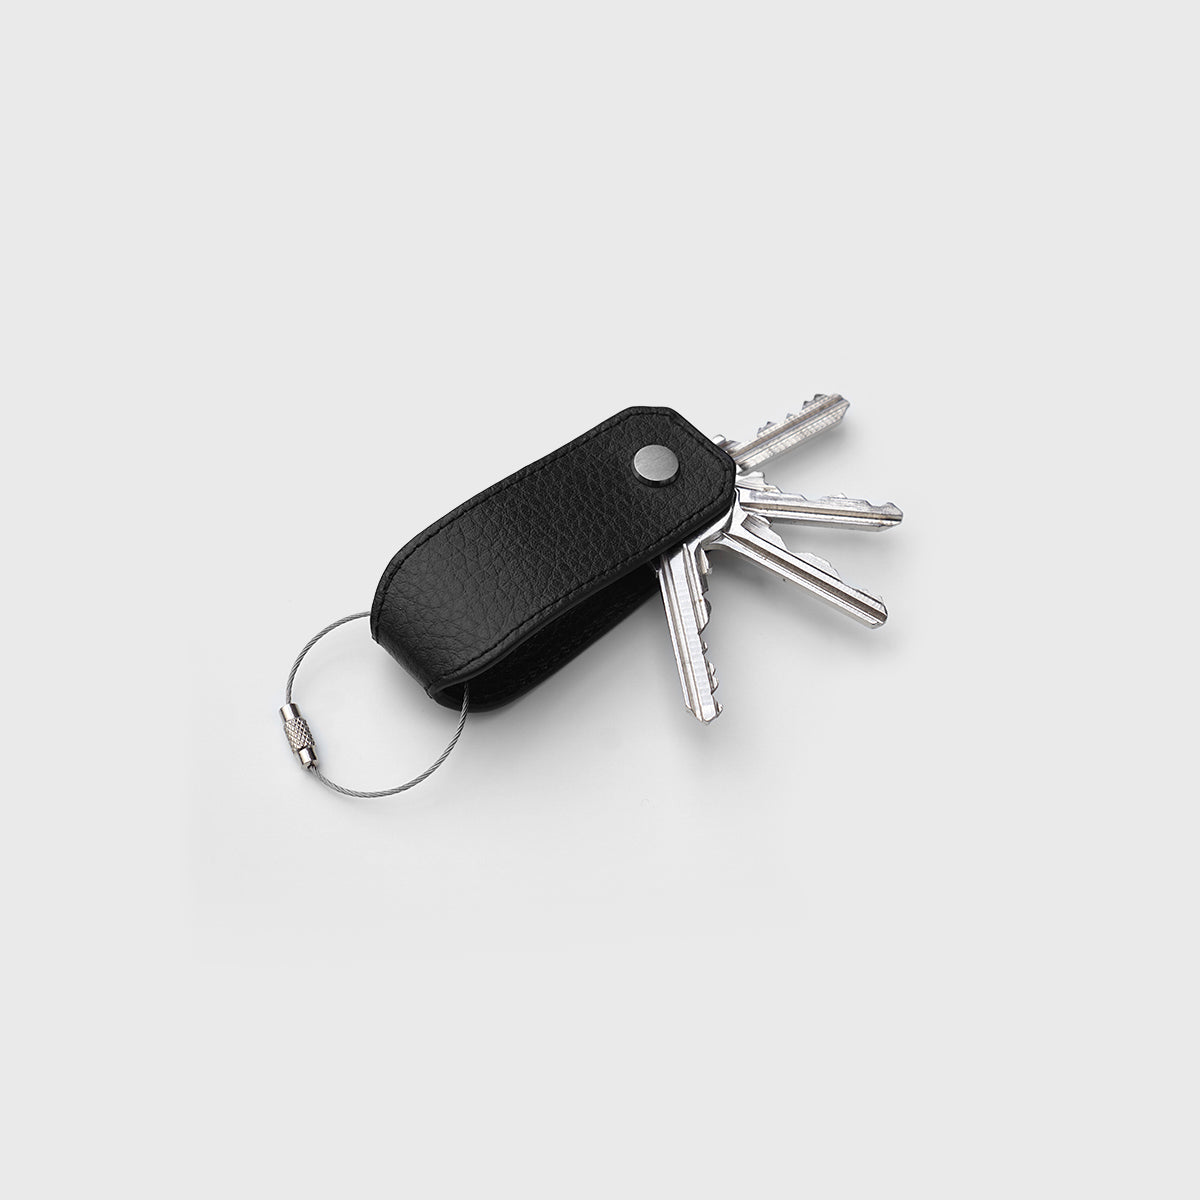 Slim Compact Key Holder - Stylish & Practical Pocket Key Organizer